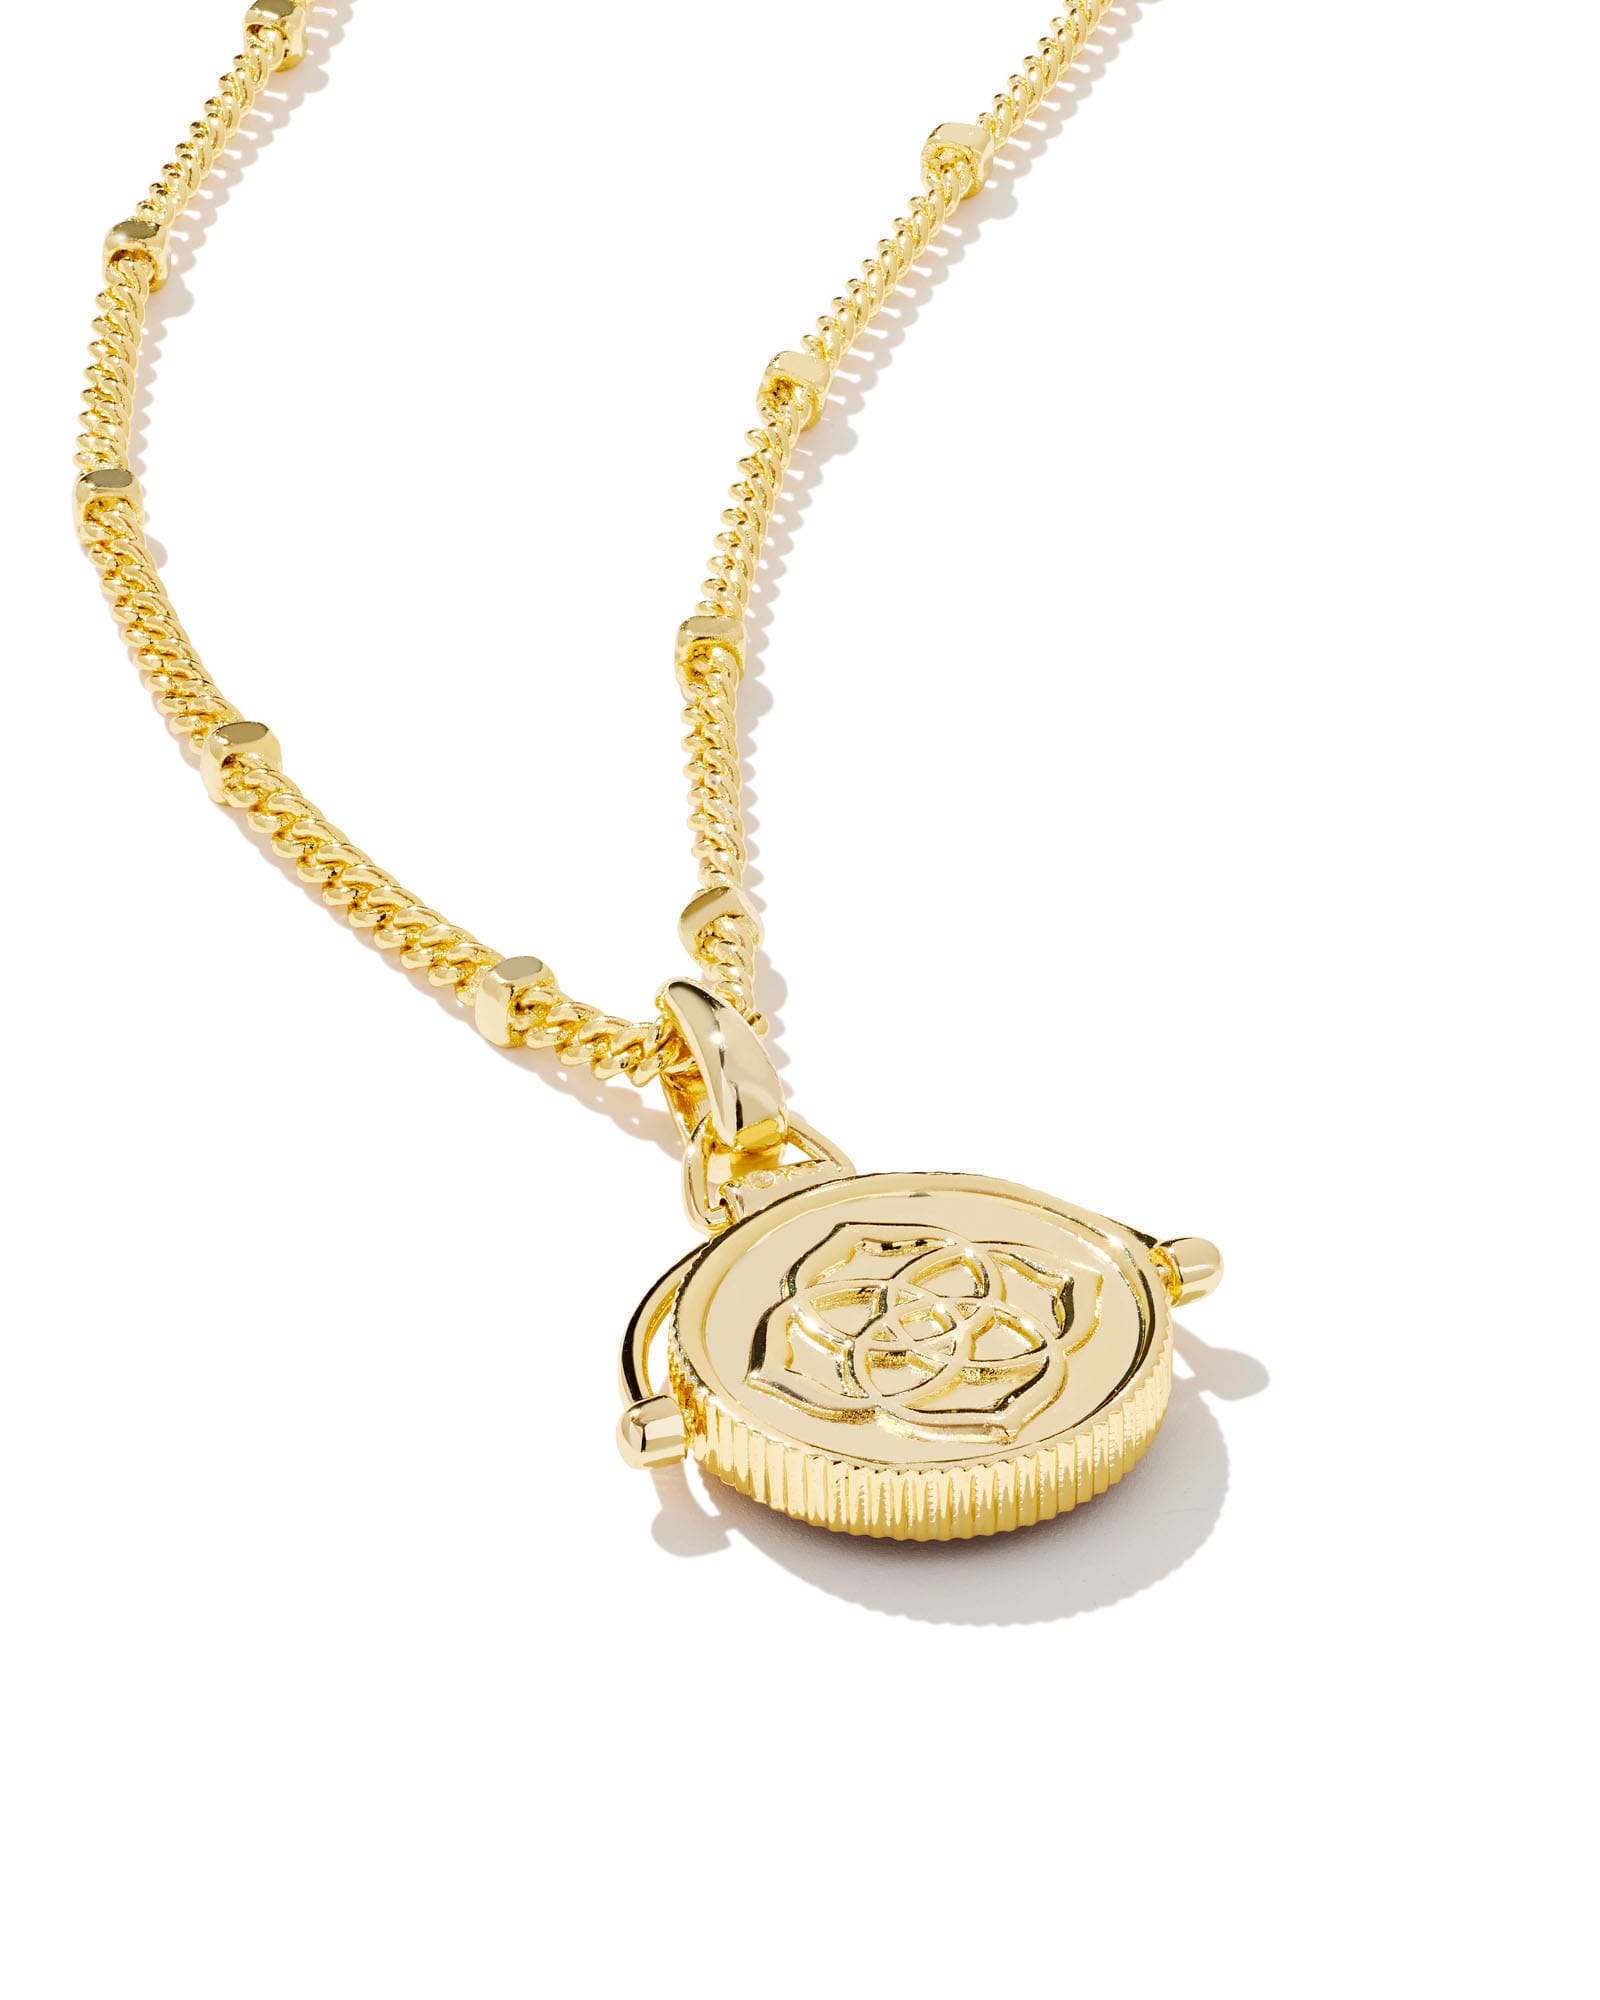 Dira Gold Reversible Pendant Necklace in Golden Obsidian